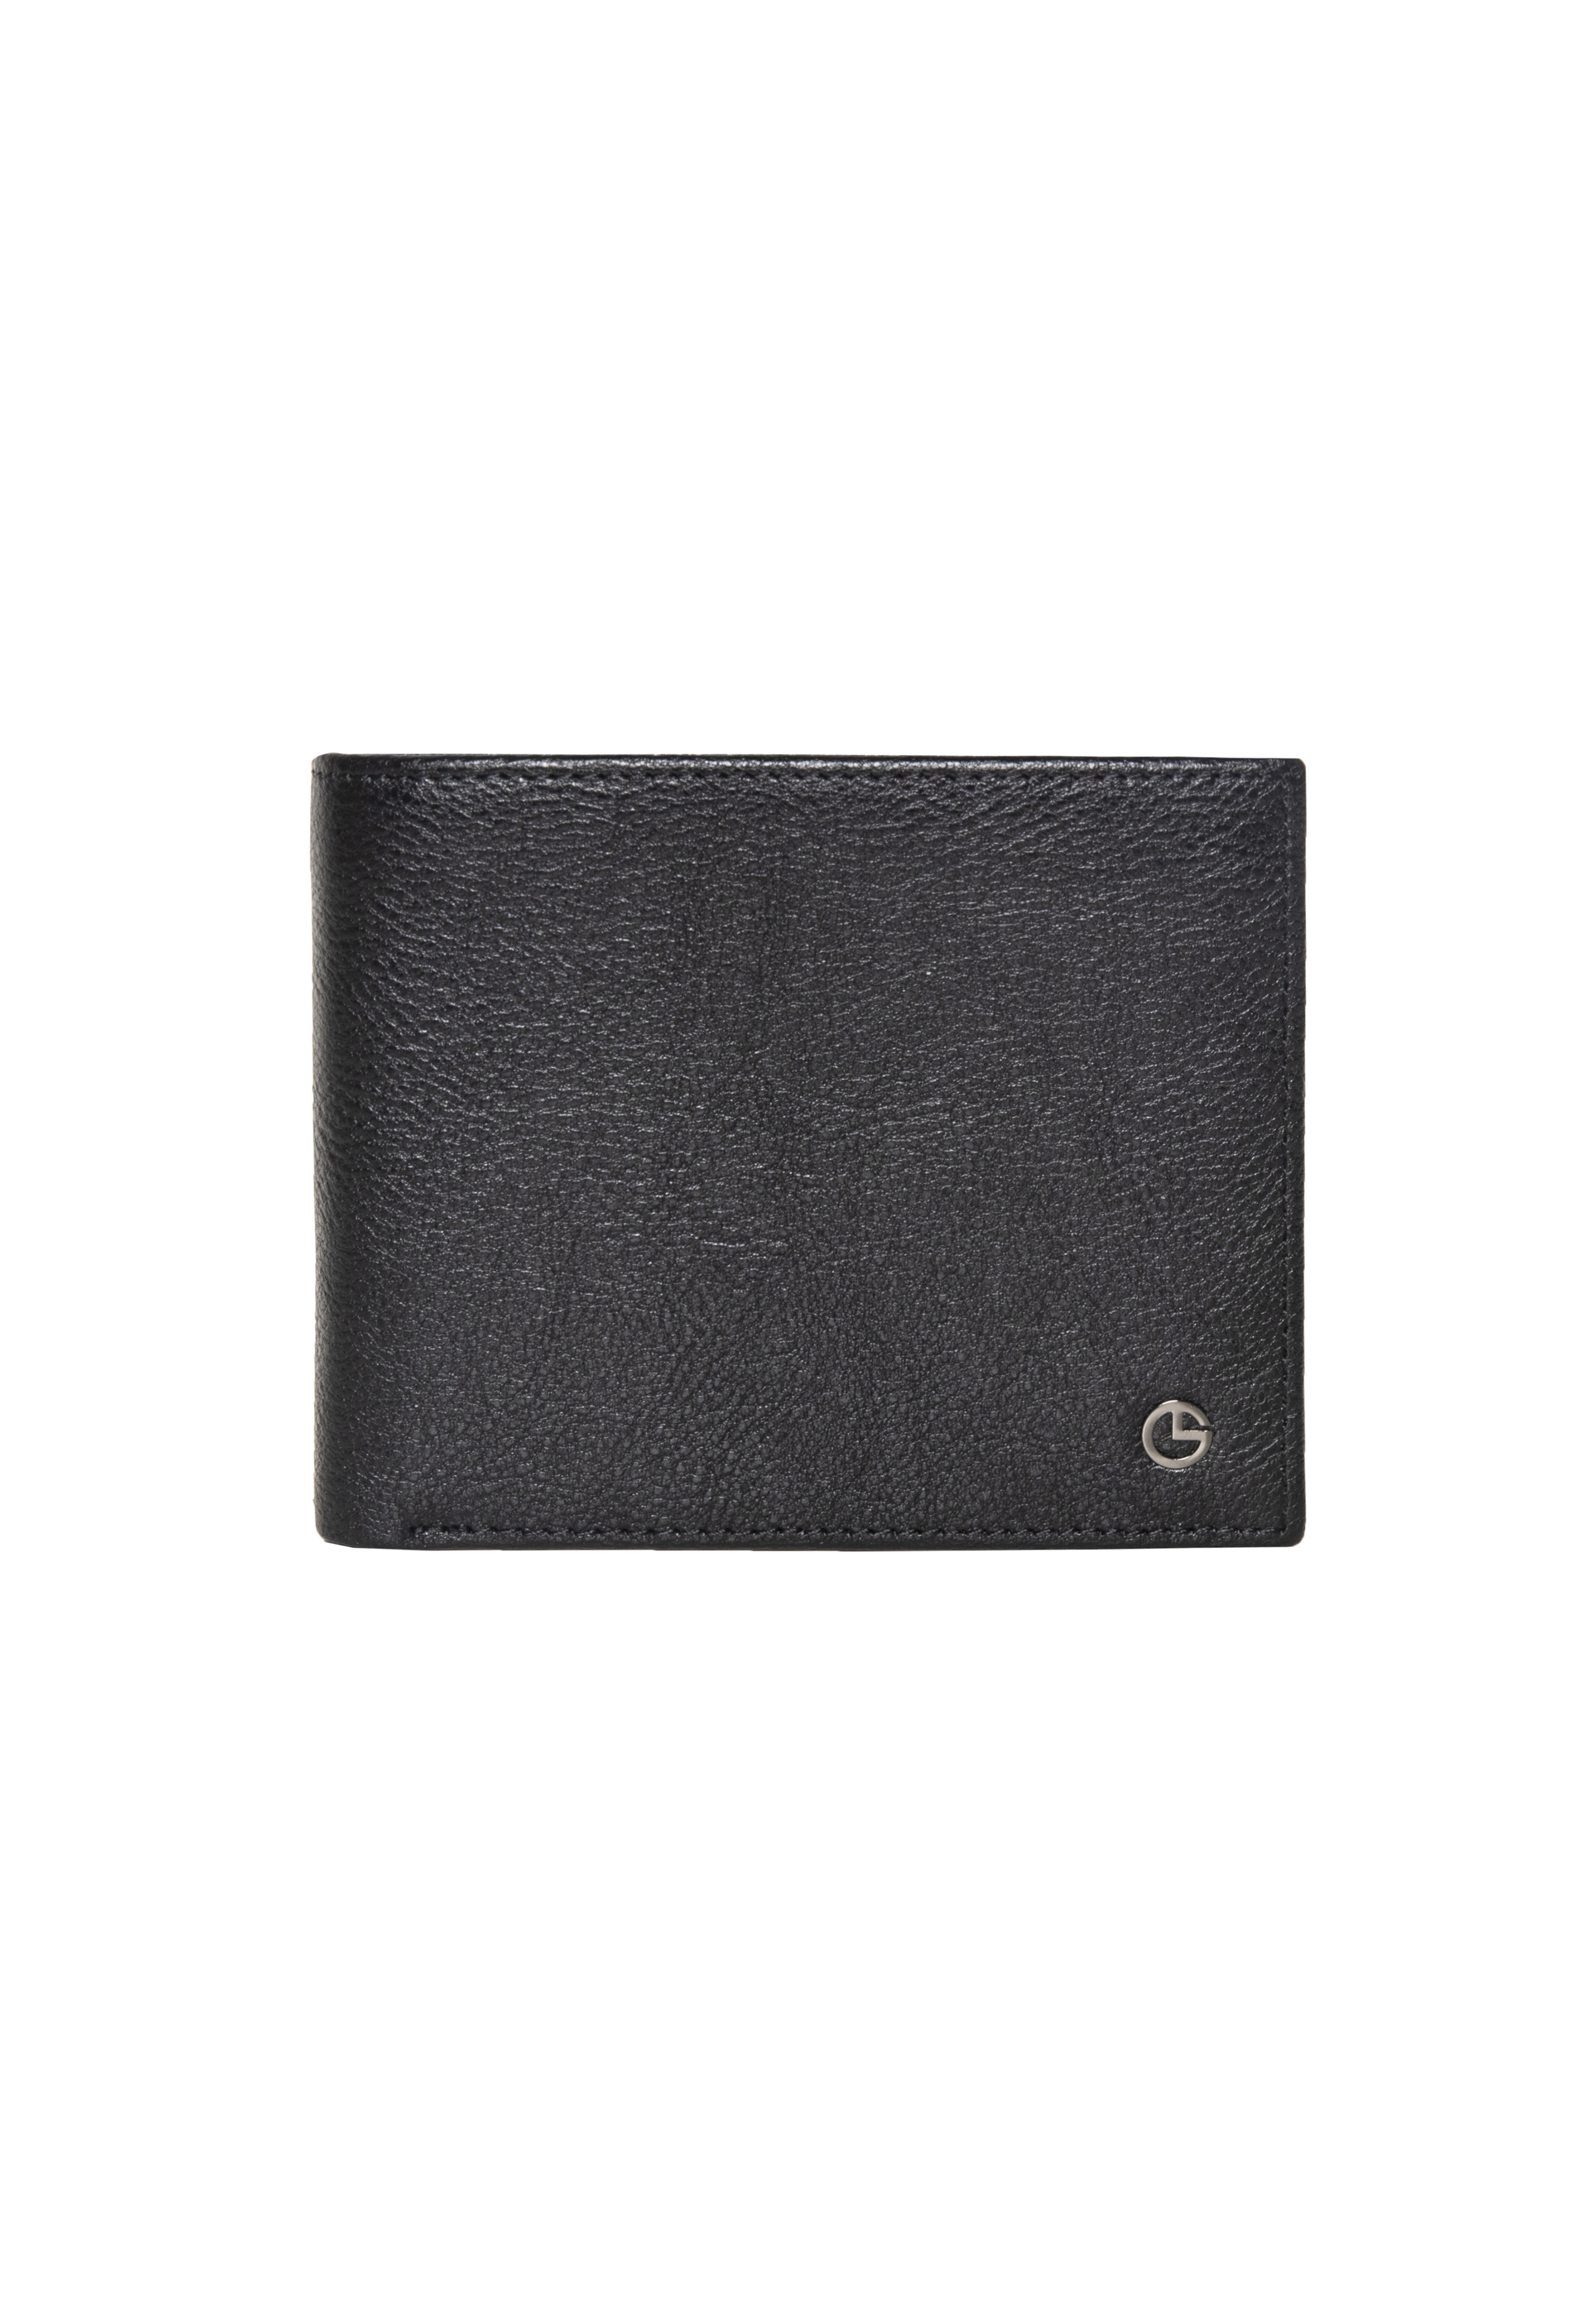 [Online Exclusive] Goldlion Genuine Leather Wallet (8 Cards Slot)